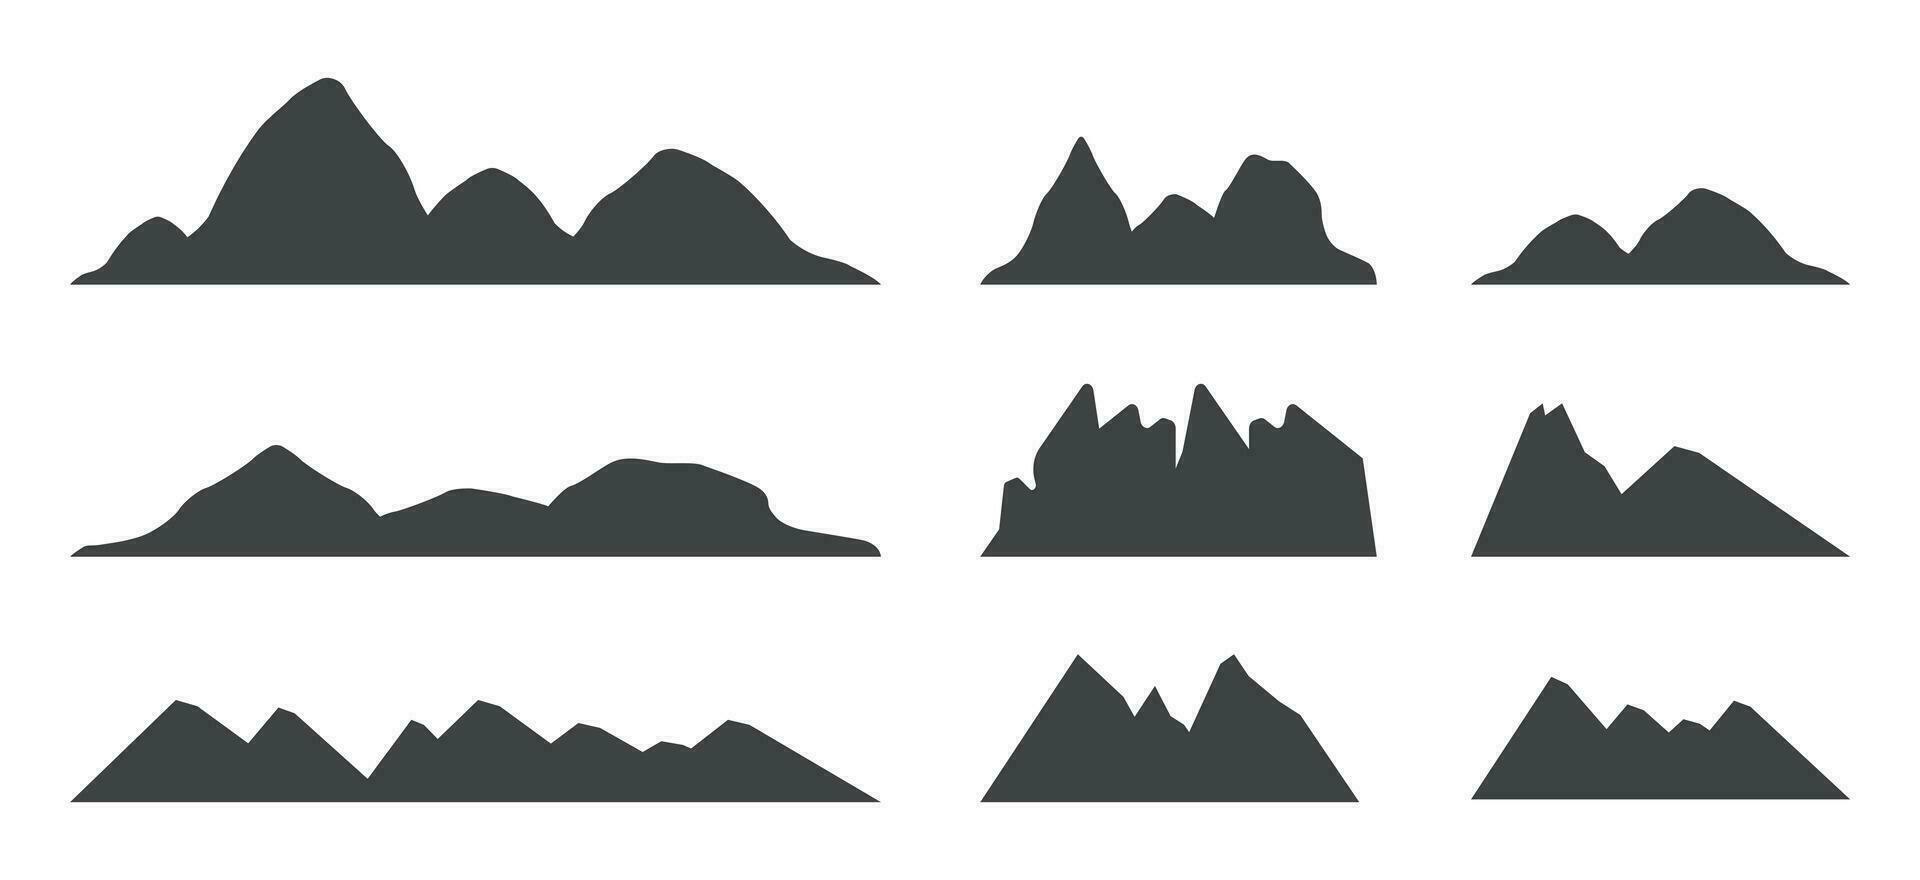 set of mountain illustration vector set isolated on white background, mountain set for logos